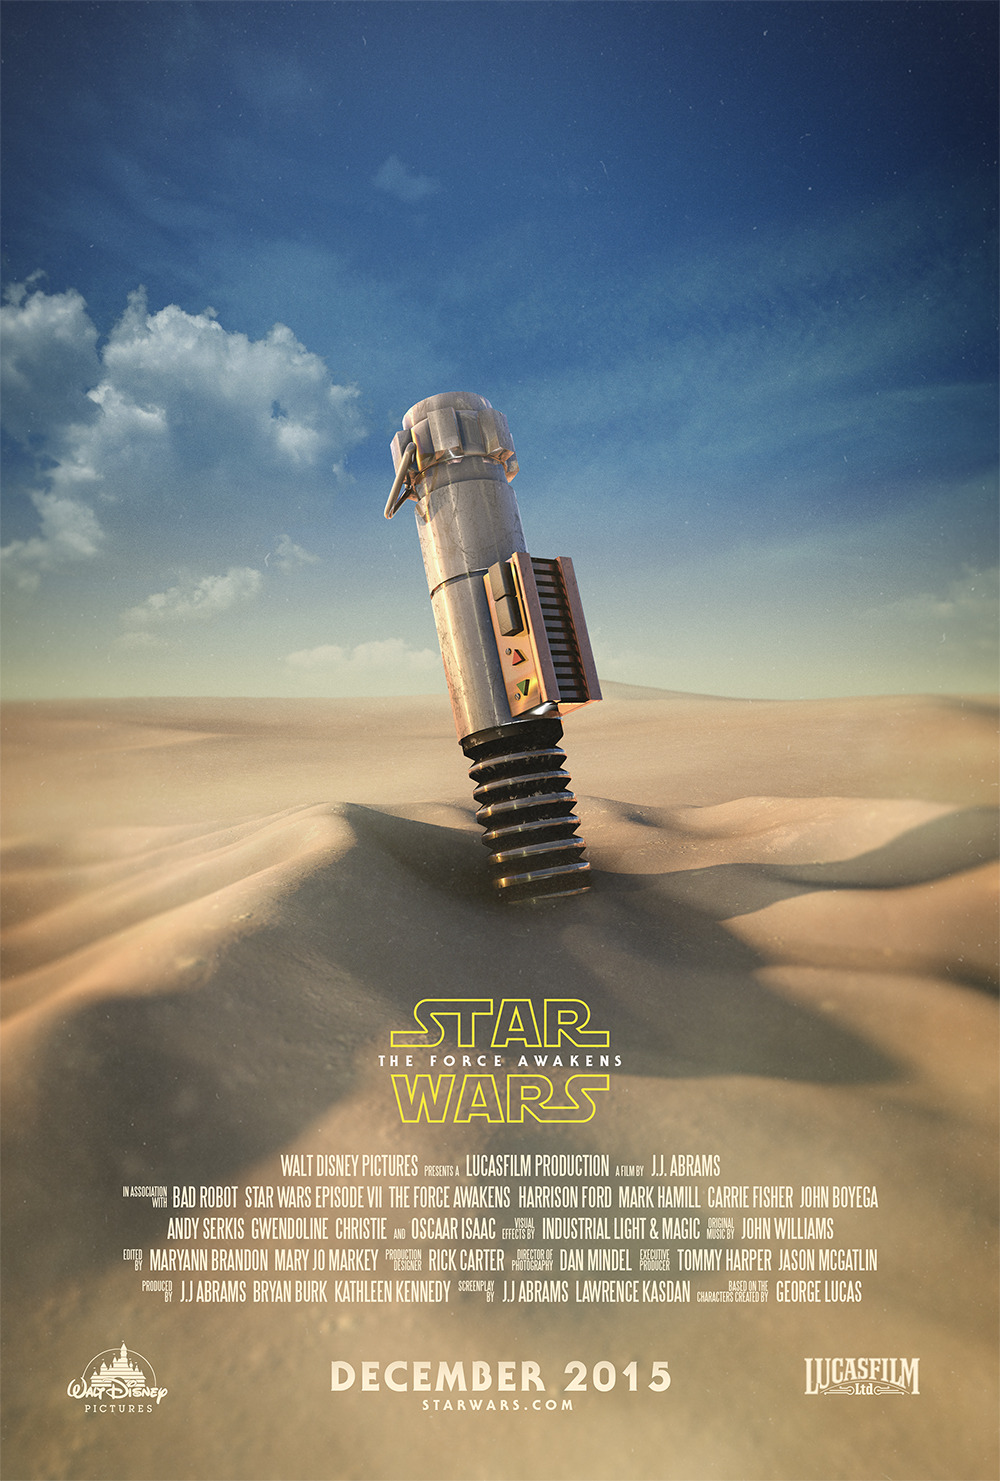 professioneel Mantel maagpijn Pixalry — Star Wars: The Force Awakens Fan Poster - Created...